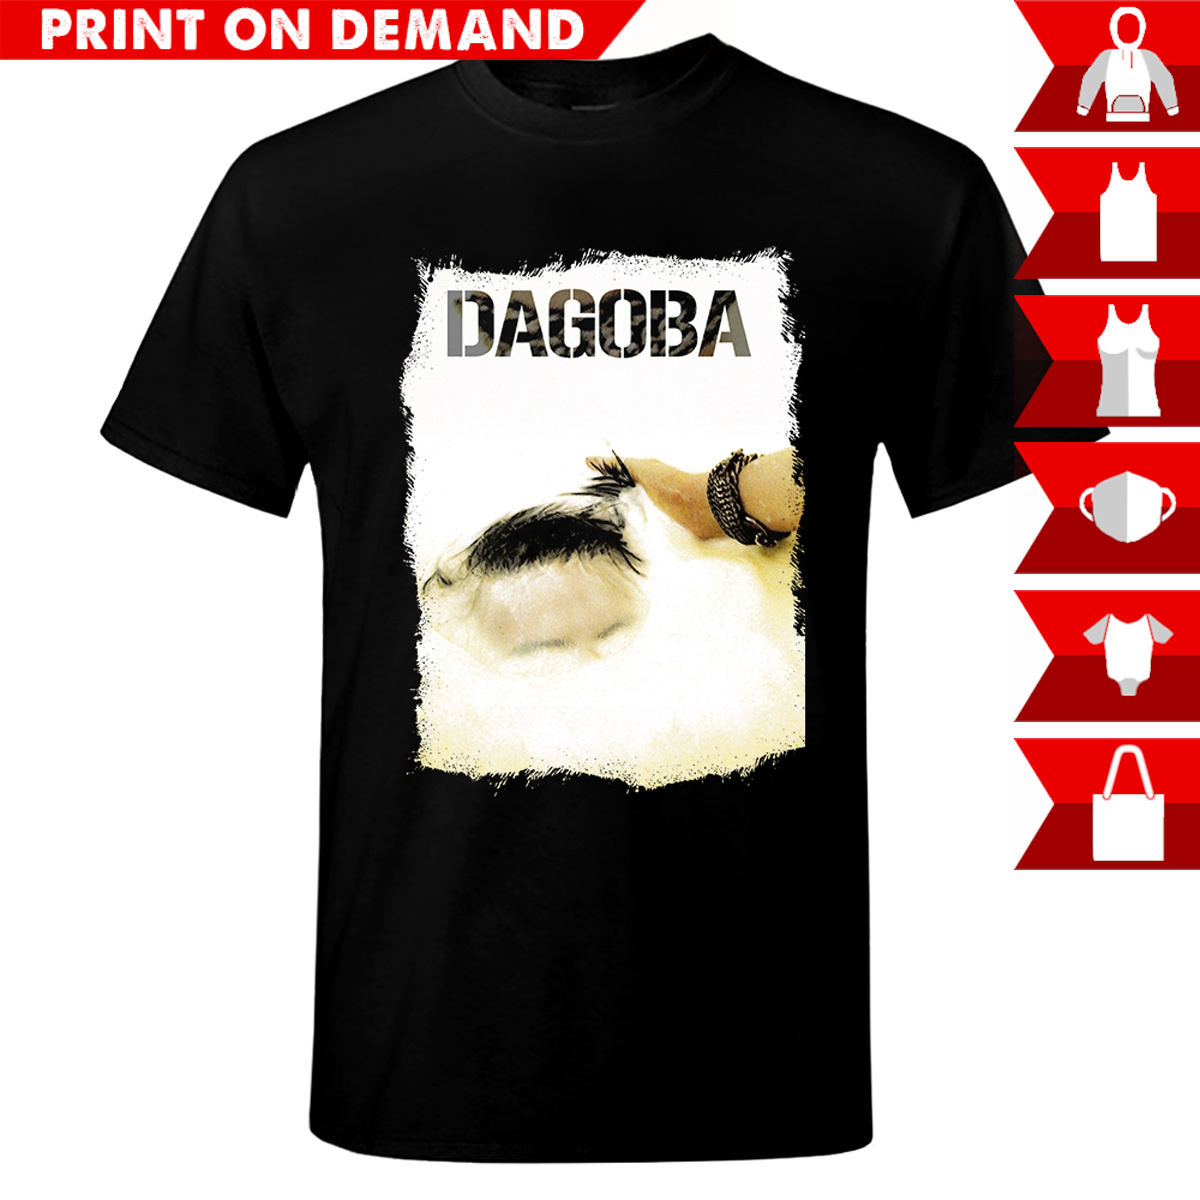 Dagoba - Dagoba - Print on demand